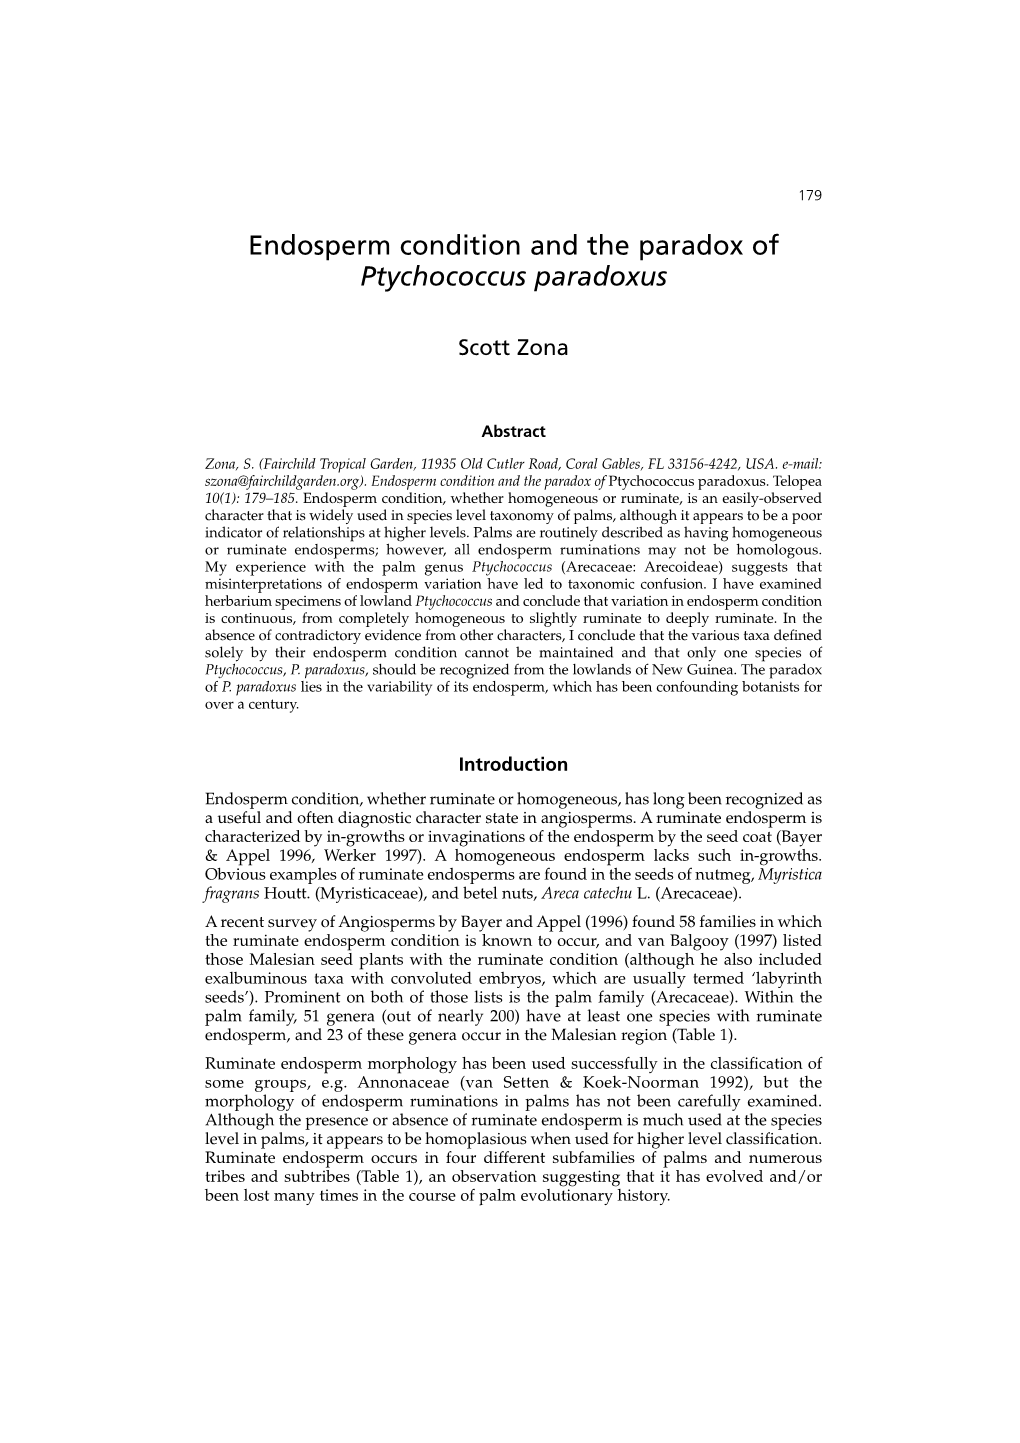 Endosperm Condition and the Paradox of Ptychococcus Paradoxus